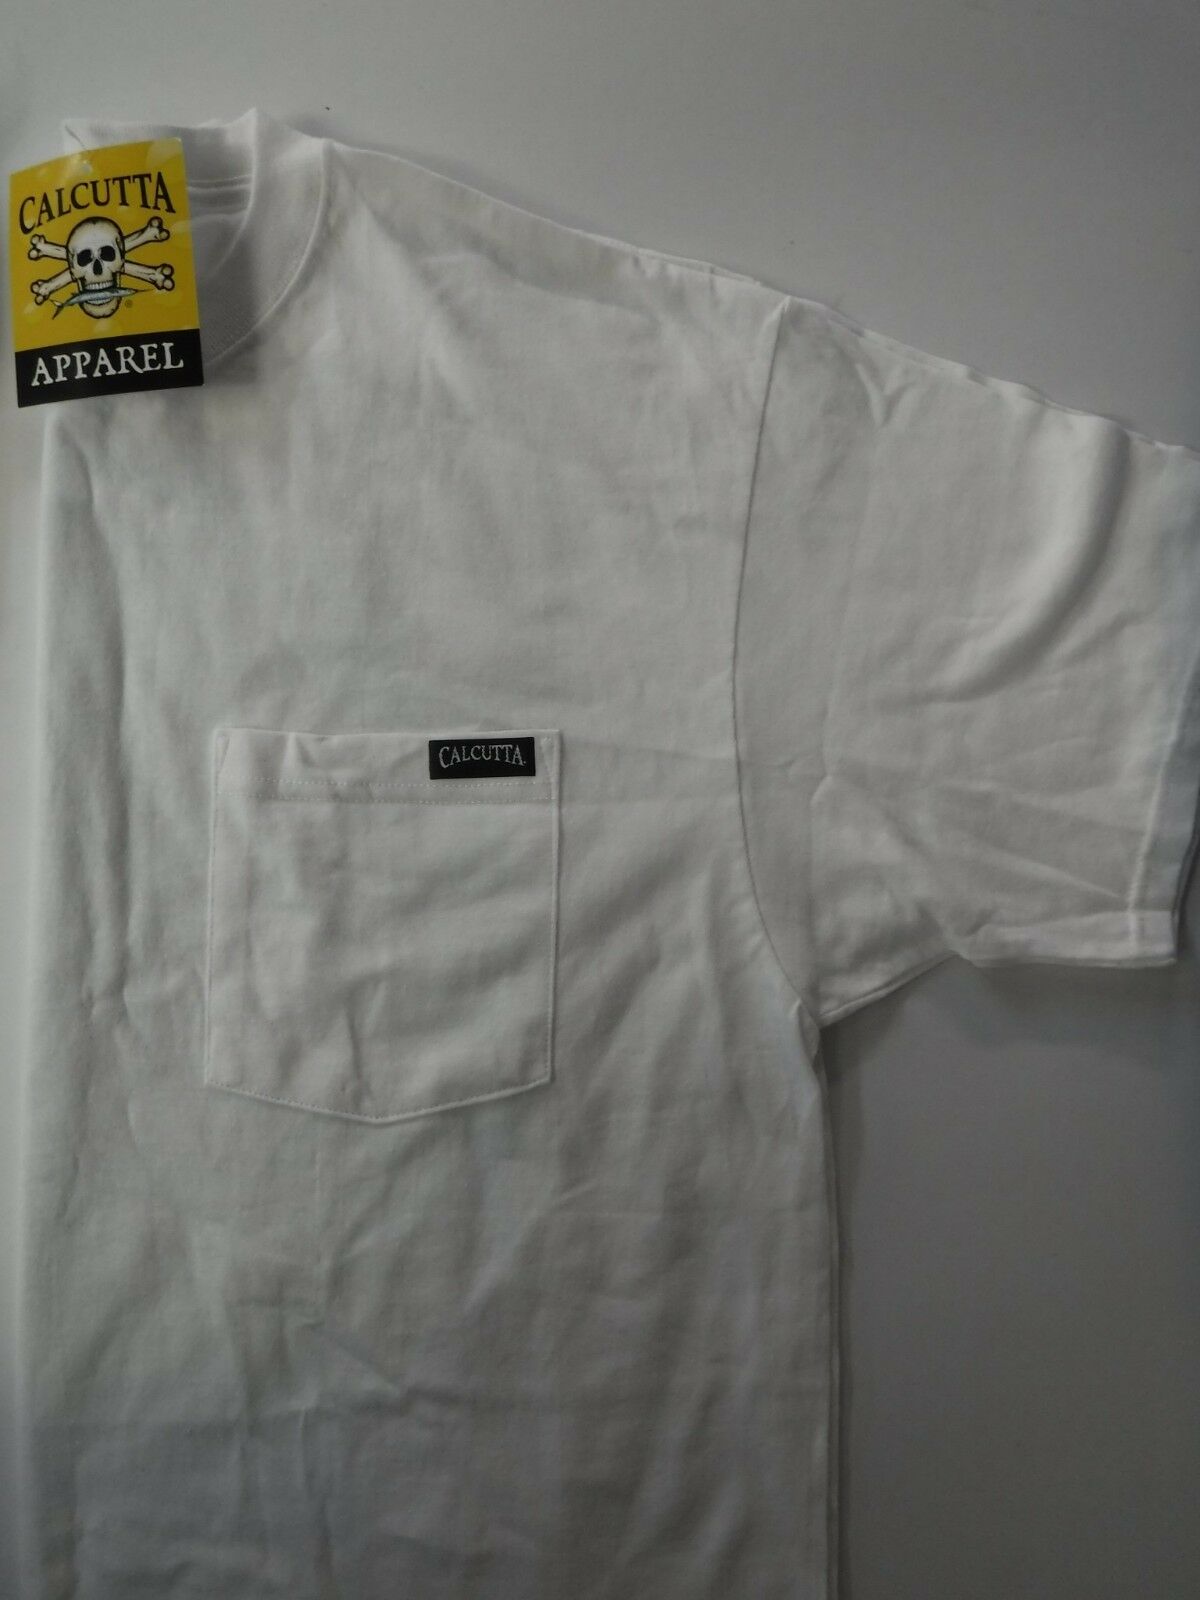 New Authentic Calcutta Short Sleeve Shirt  White/ Front Pocket/ Back Striper/Faded Logo  XLarge